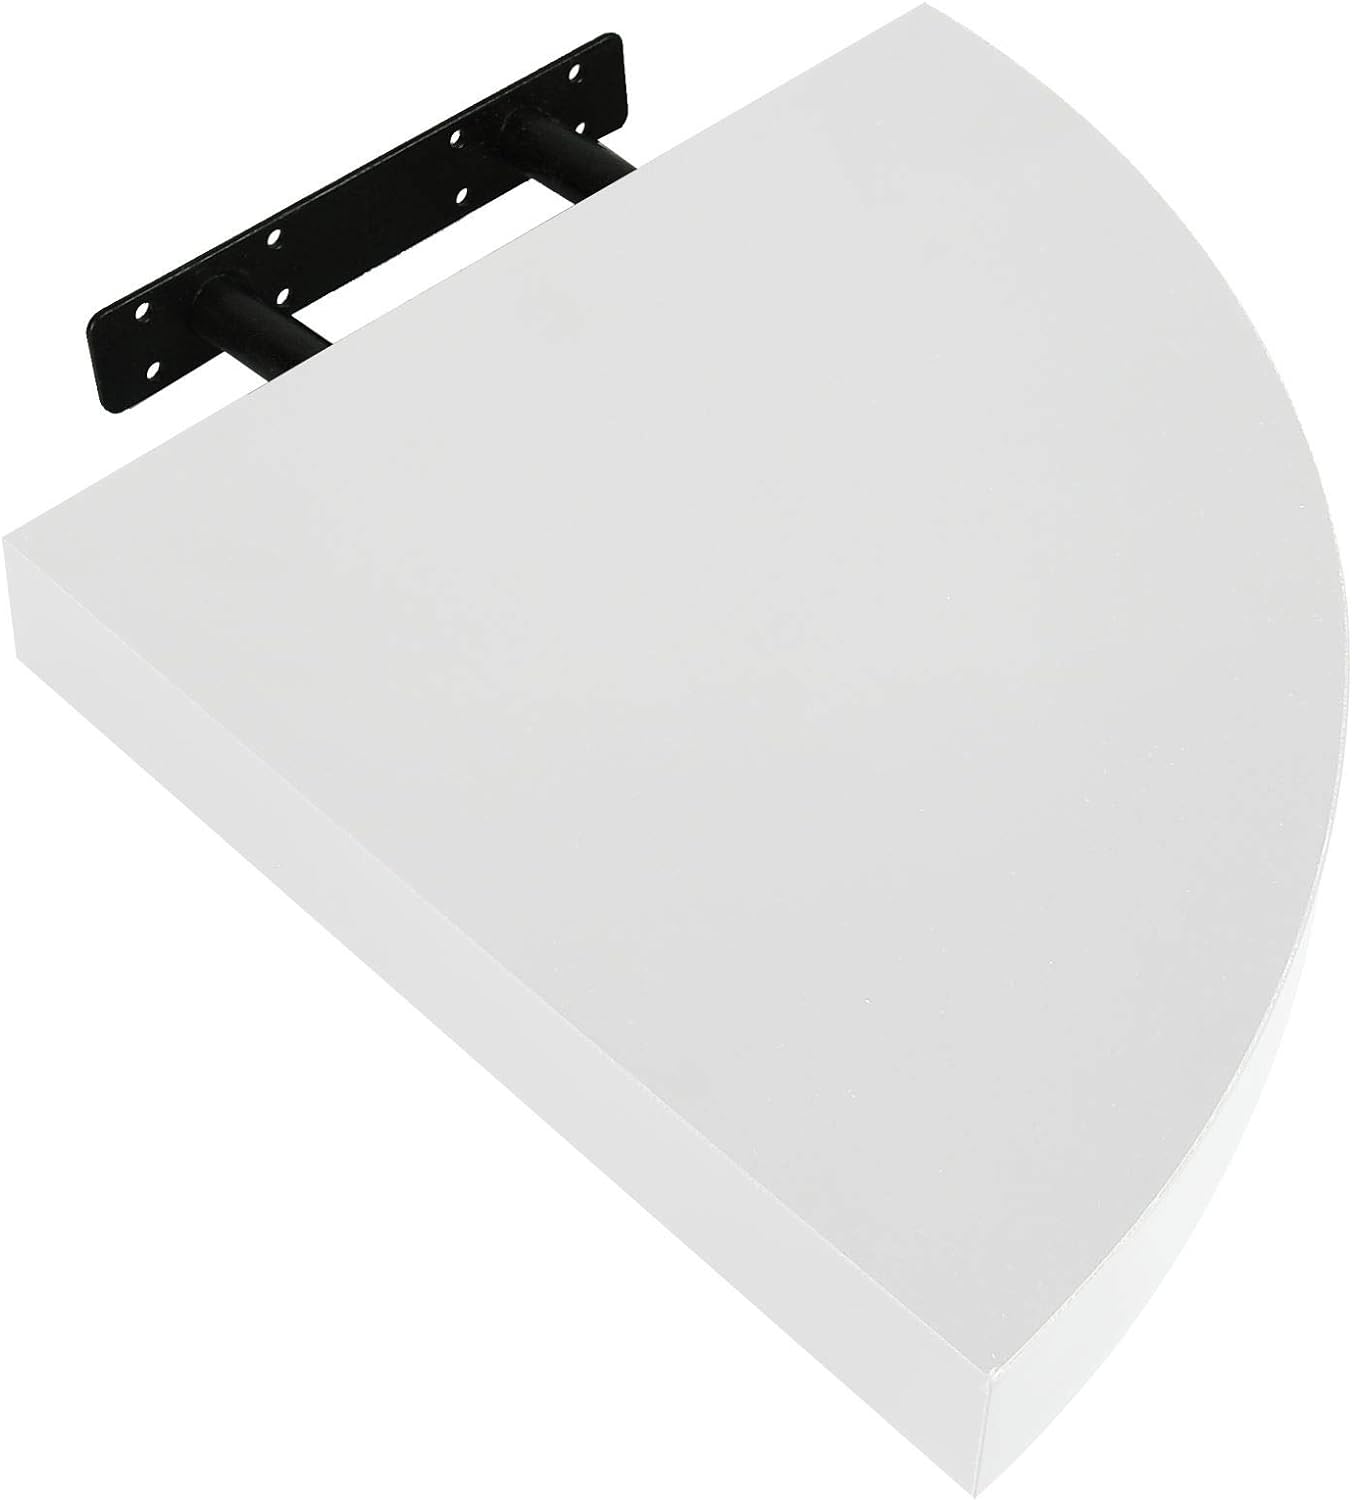 Floating and Elegant Corner Wall Shelf - for Display, Home Study Lounge WHITE 29cm-Distinct Designs (London) Ltd